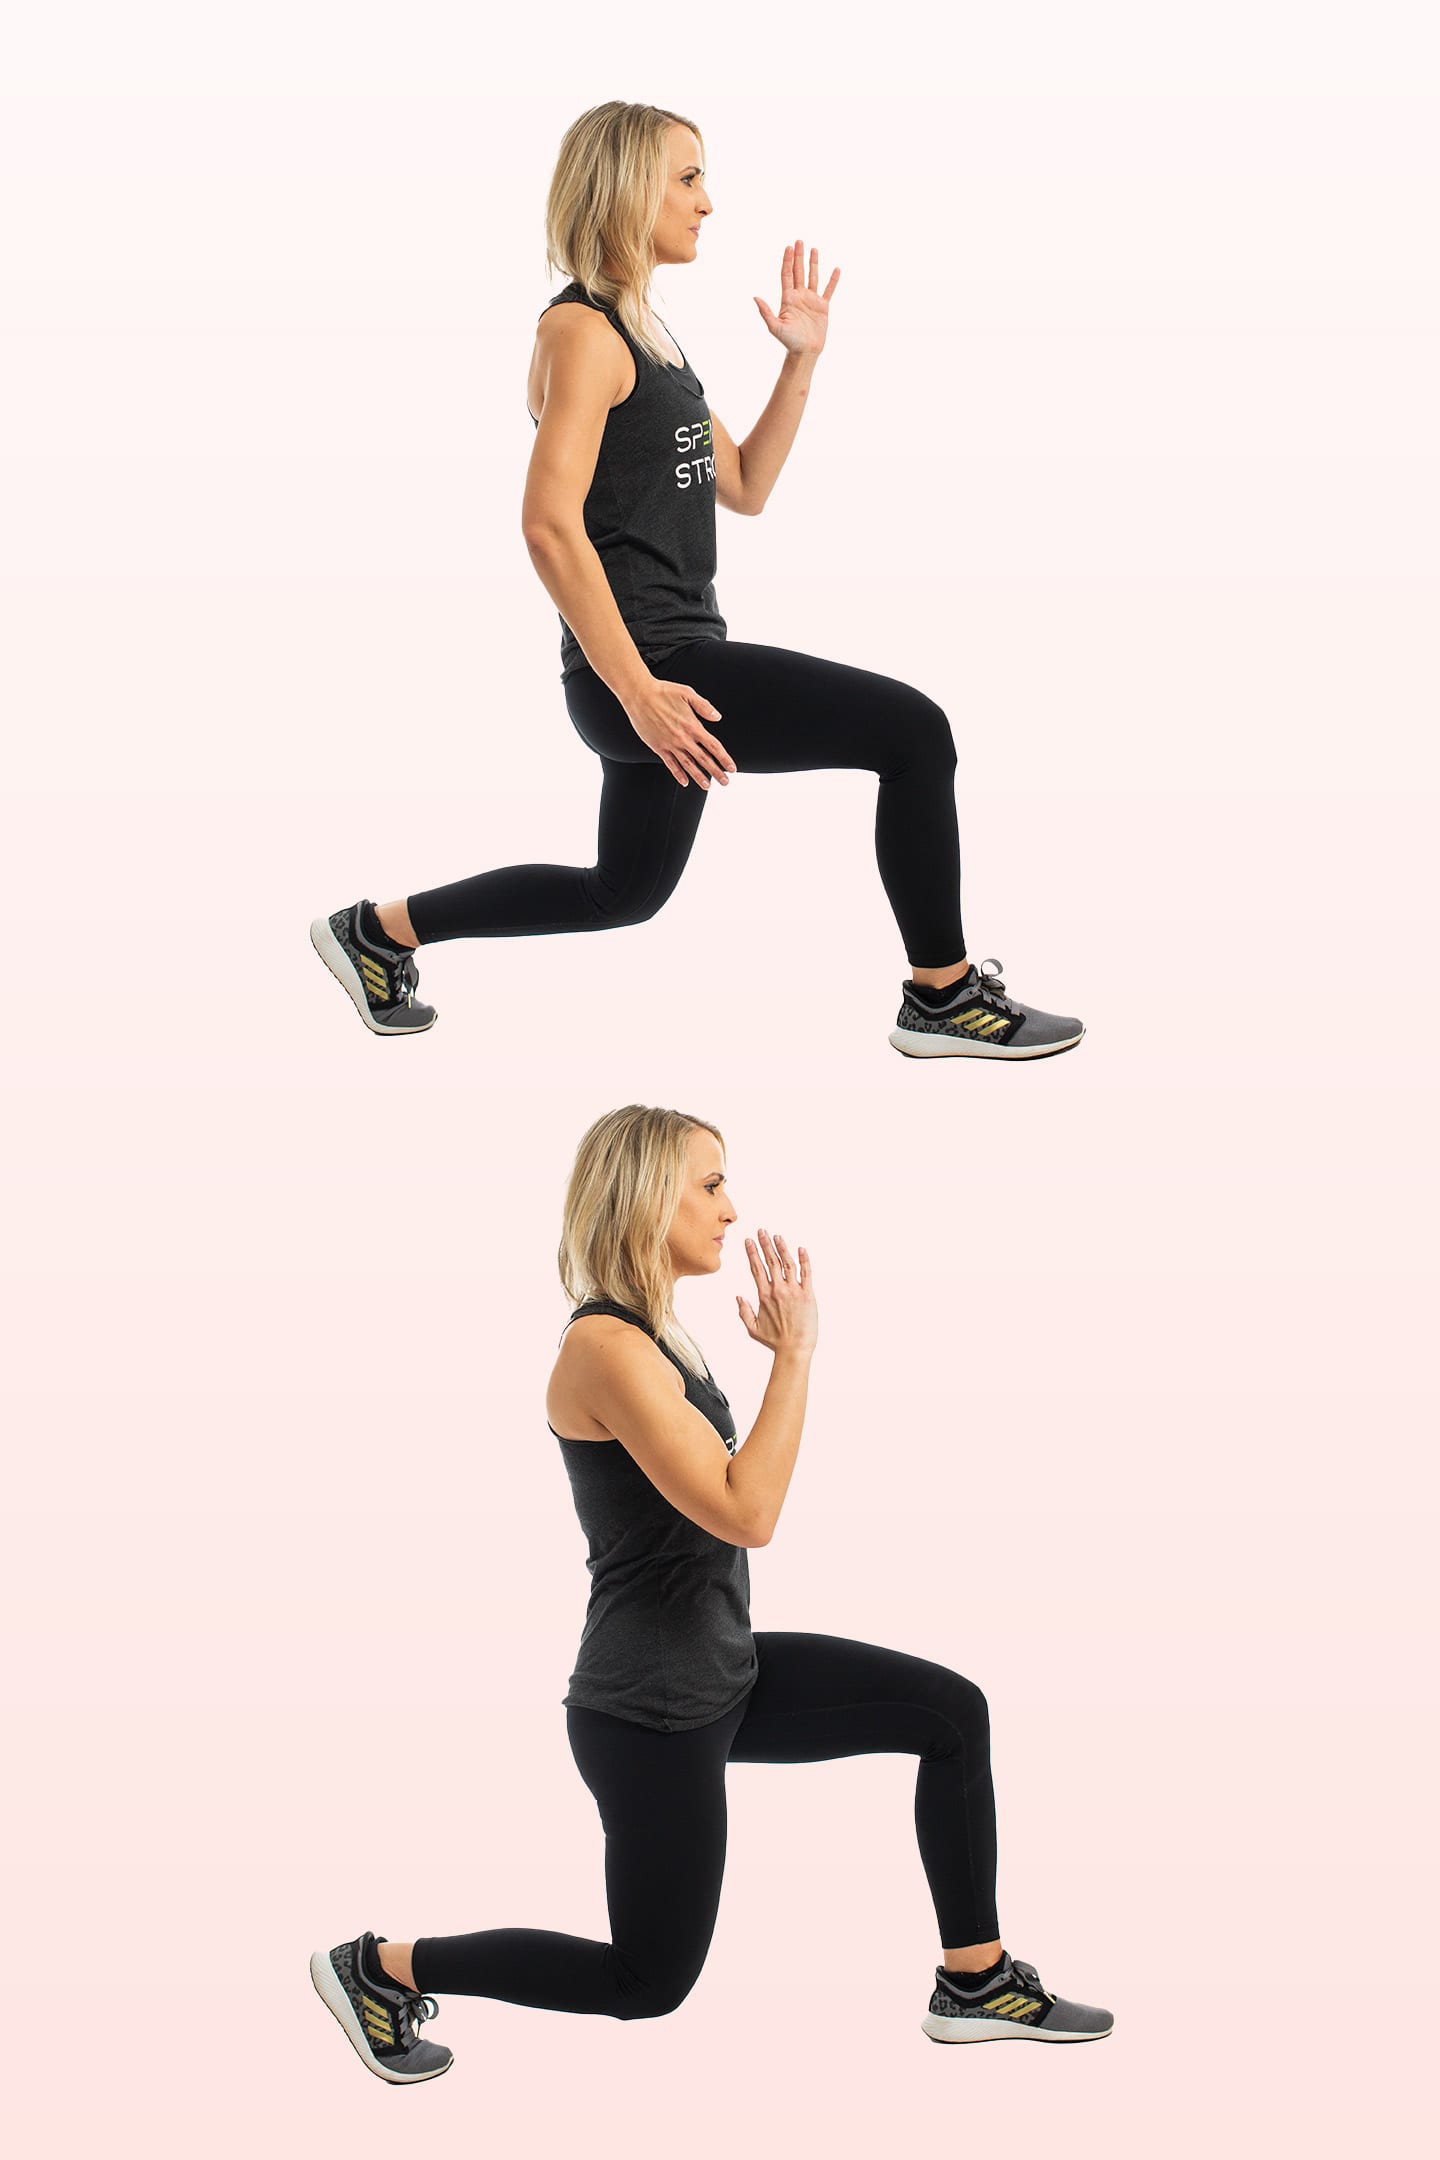 split squat jump exercise